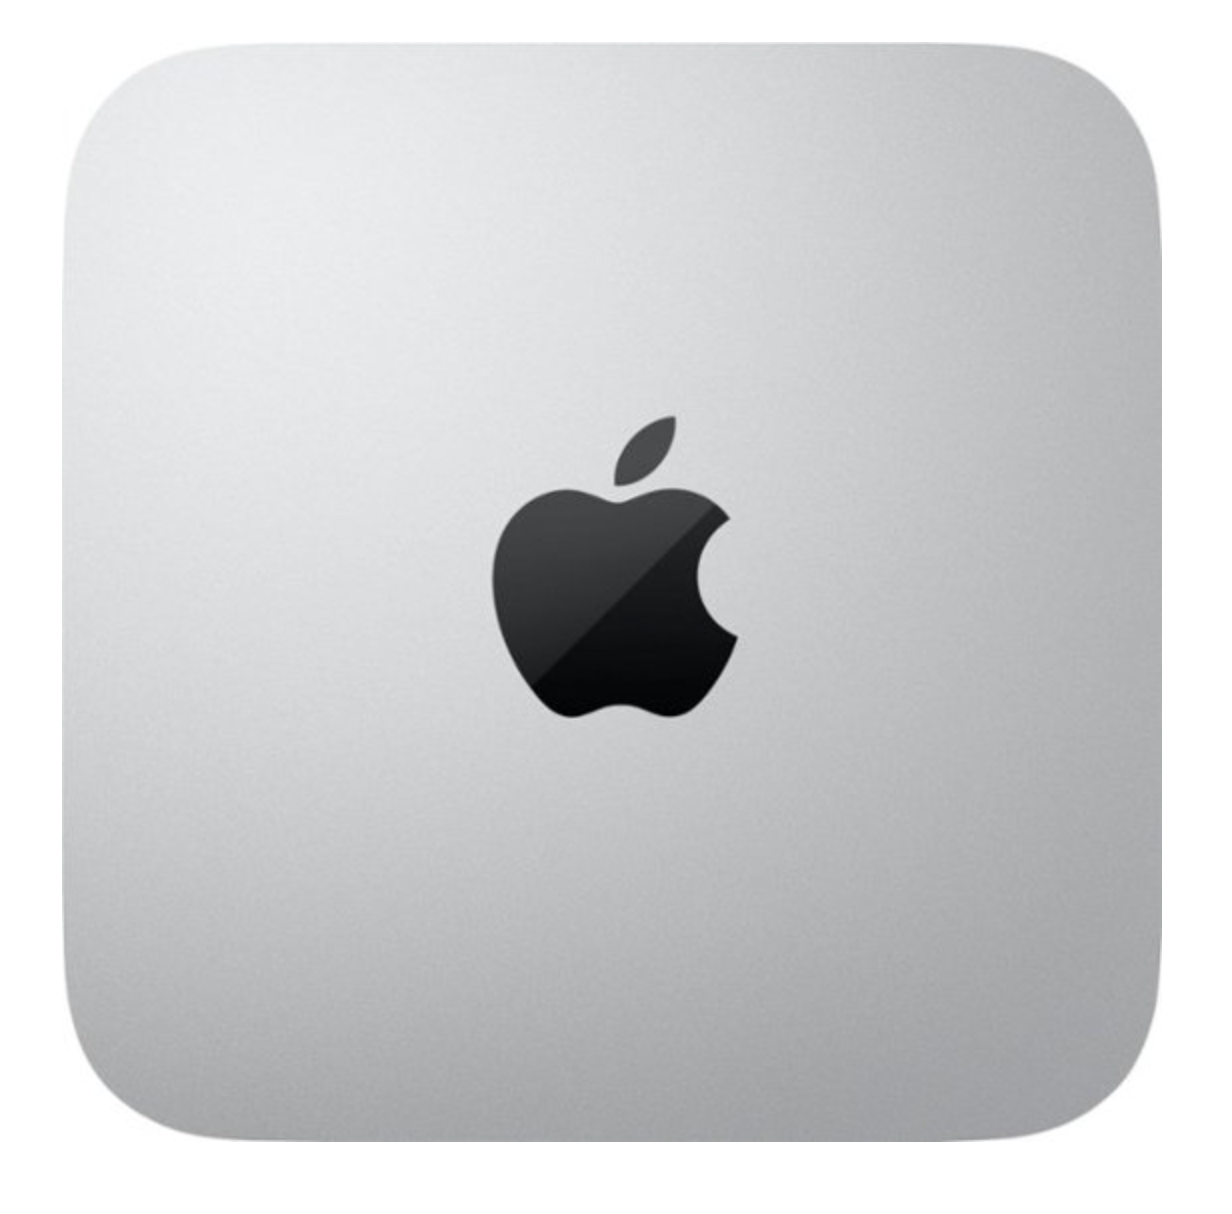 Mac mini Desktop - Apple M1 chip - 8GB Memory - 512GB SSD - Silver